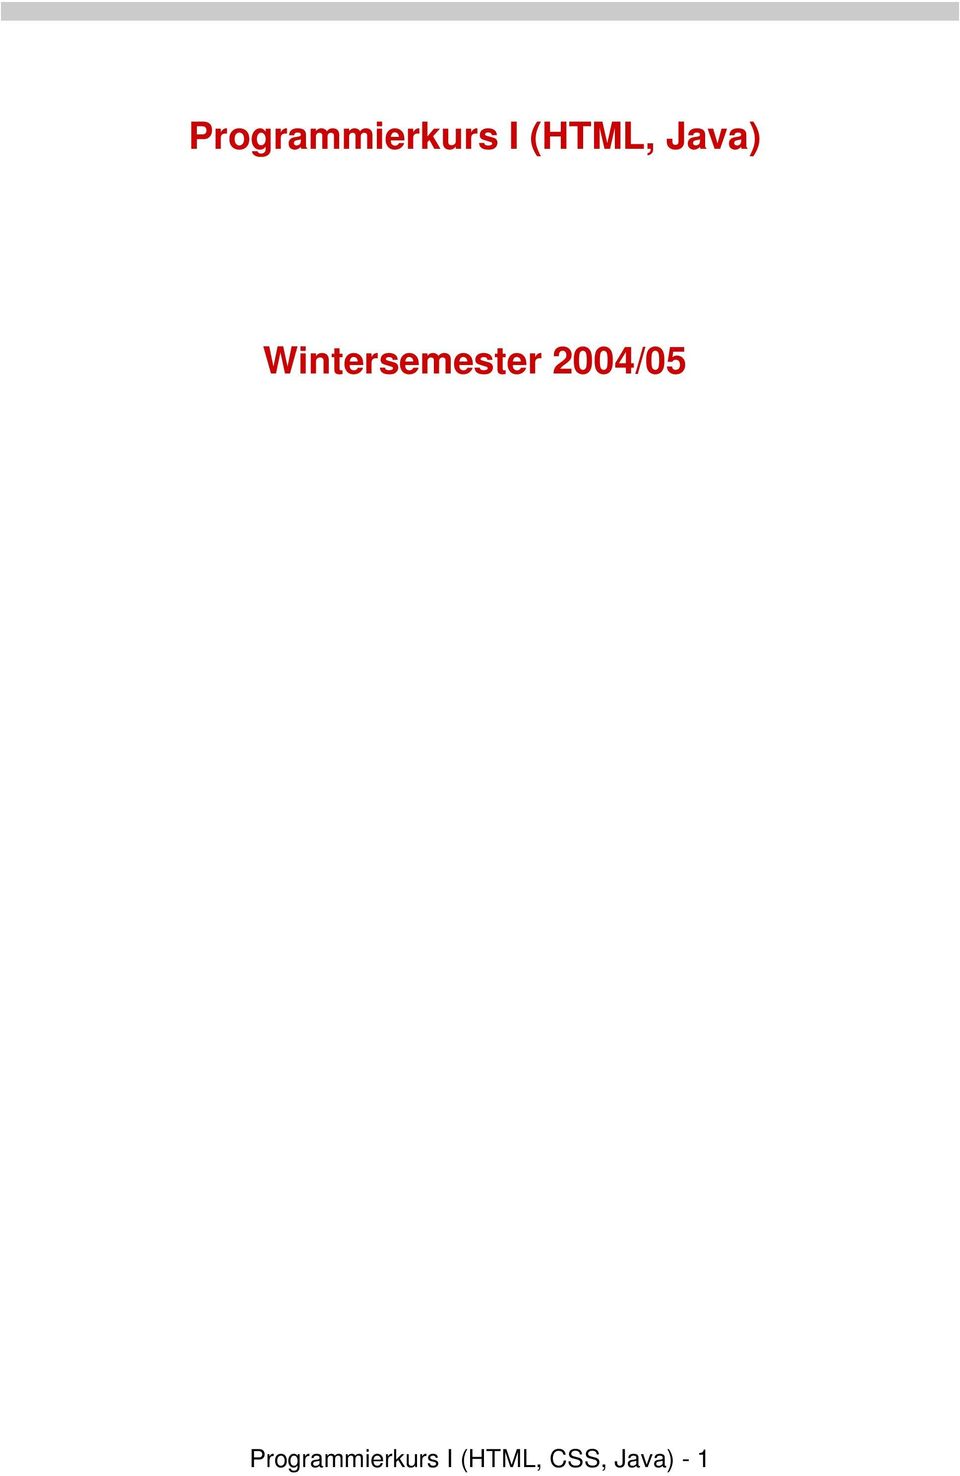 Wintersemester 2004/05 